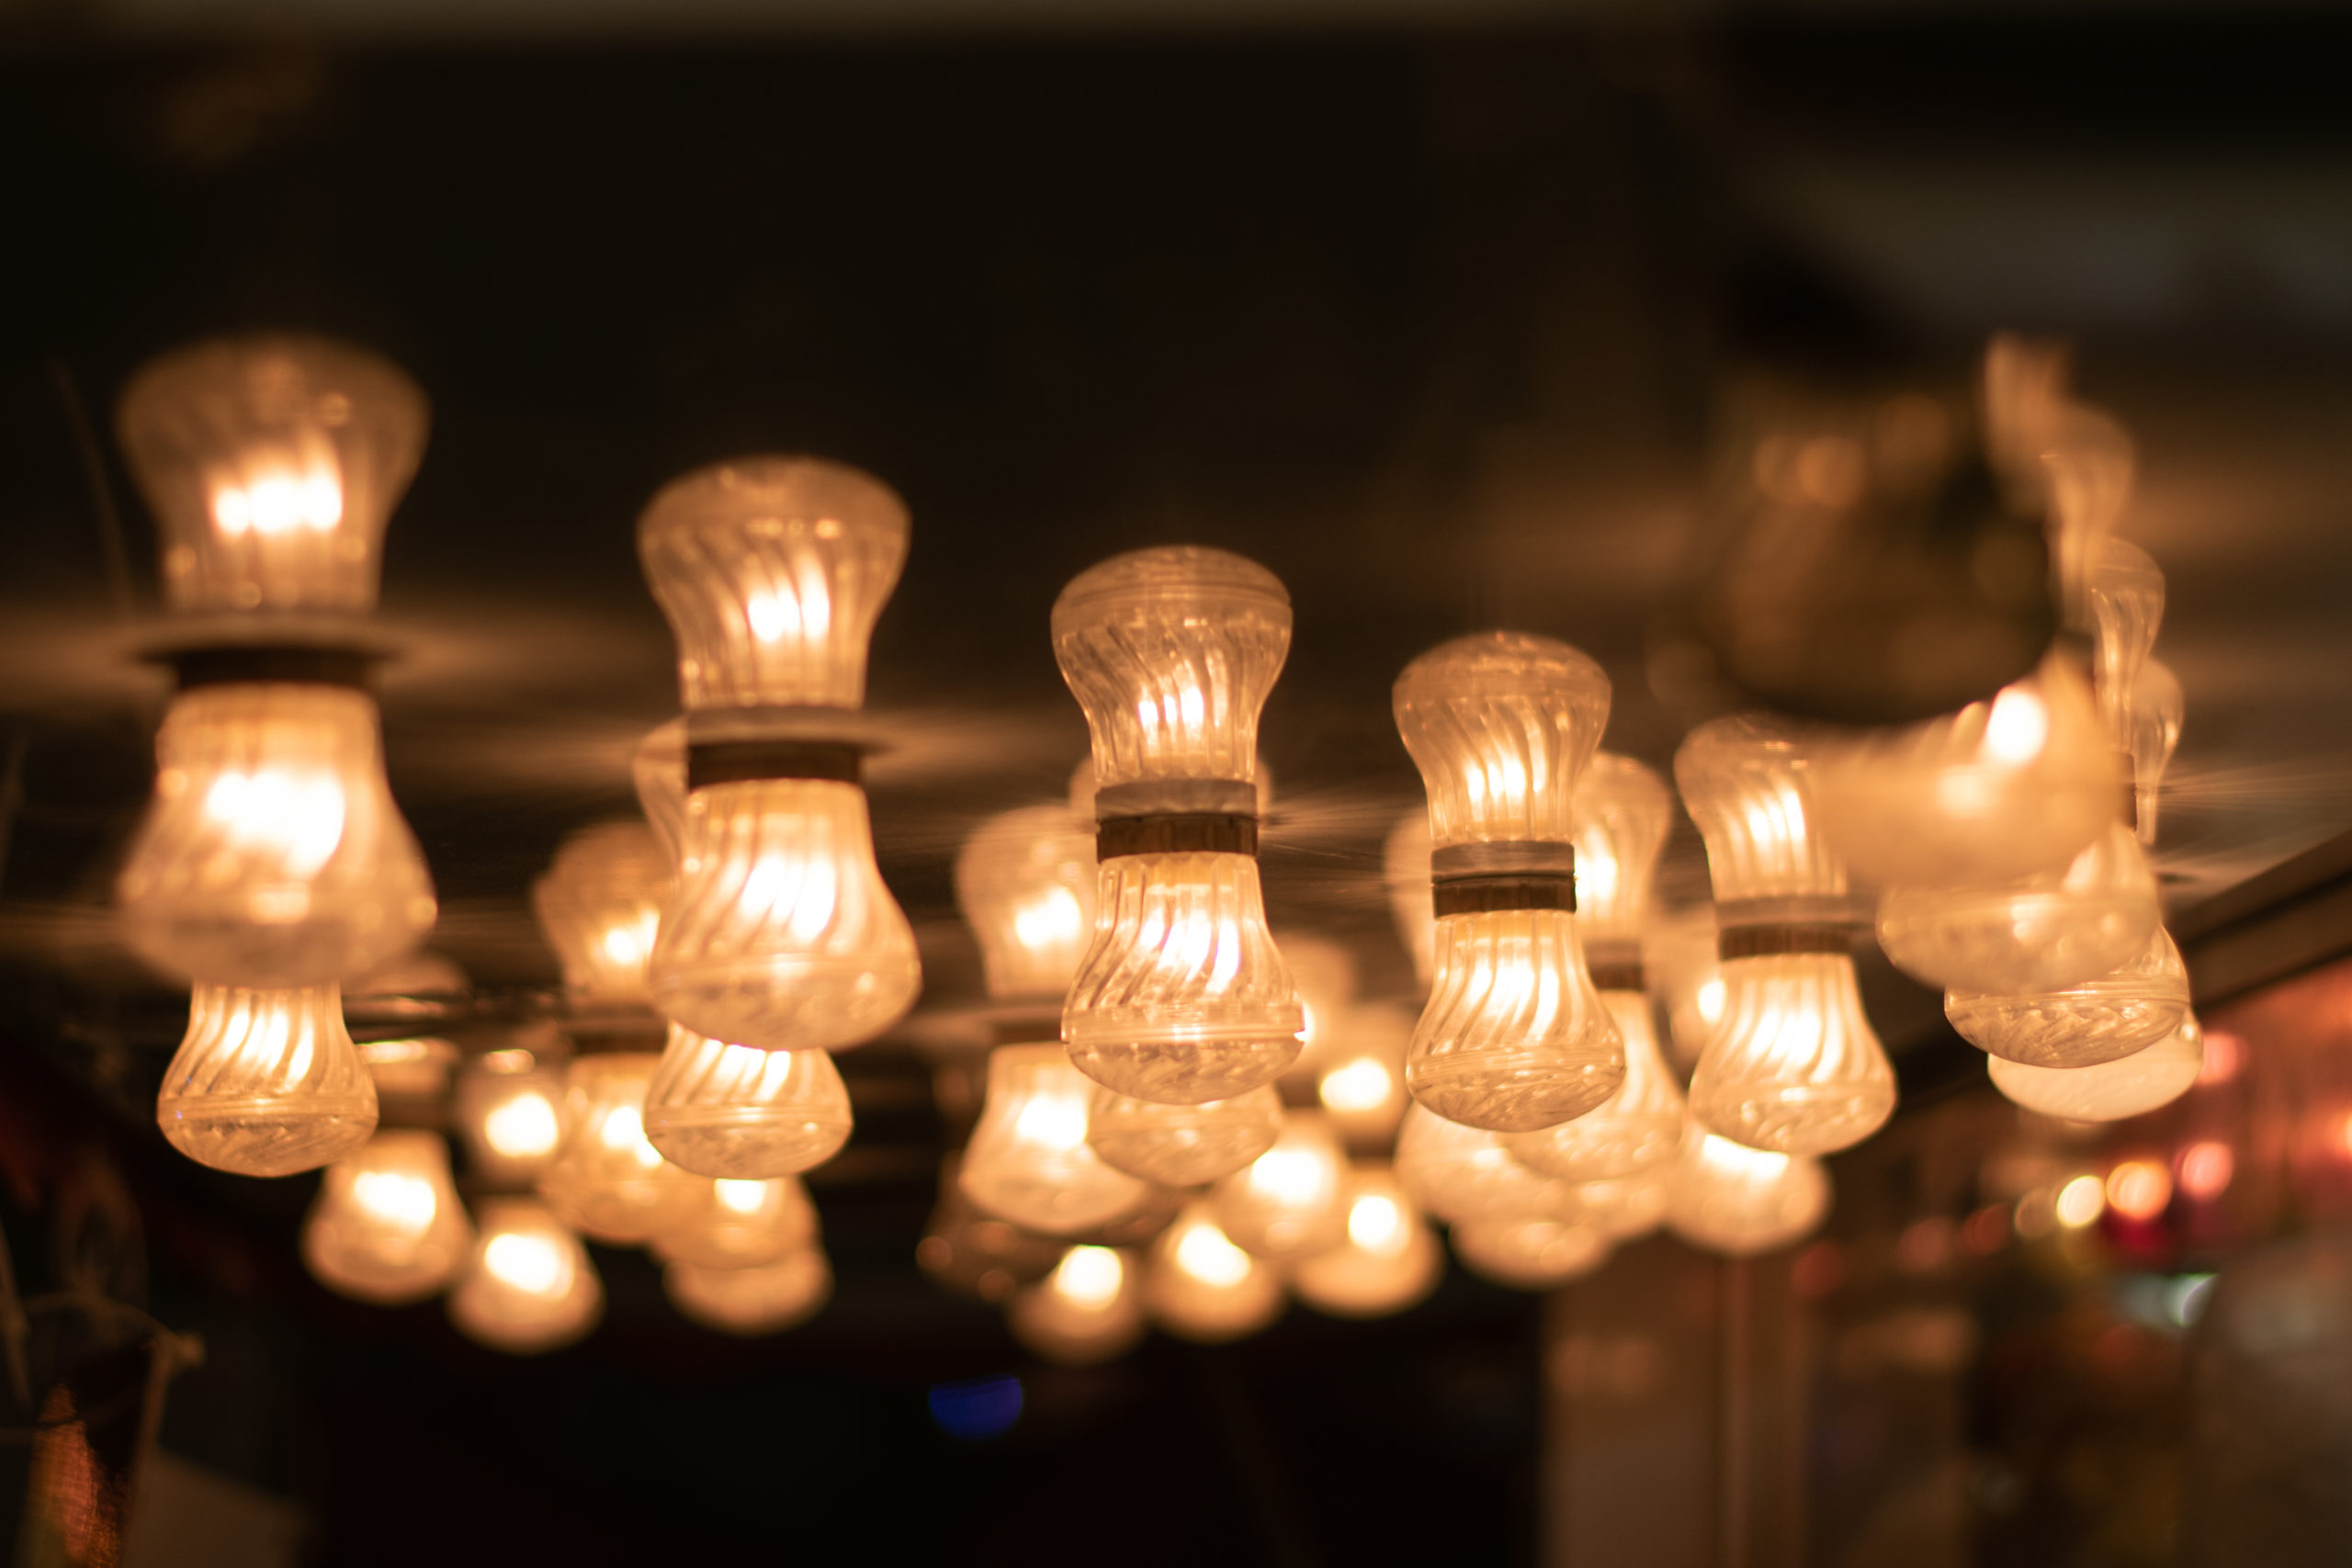 A closeup photo of carnival food truck lightbulbs.